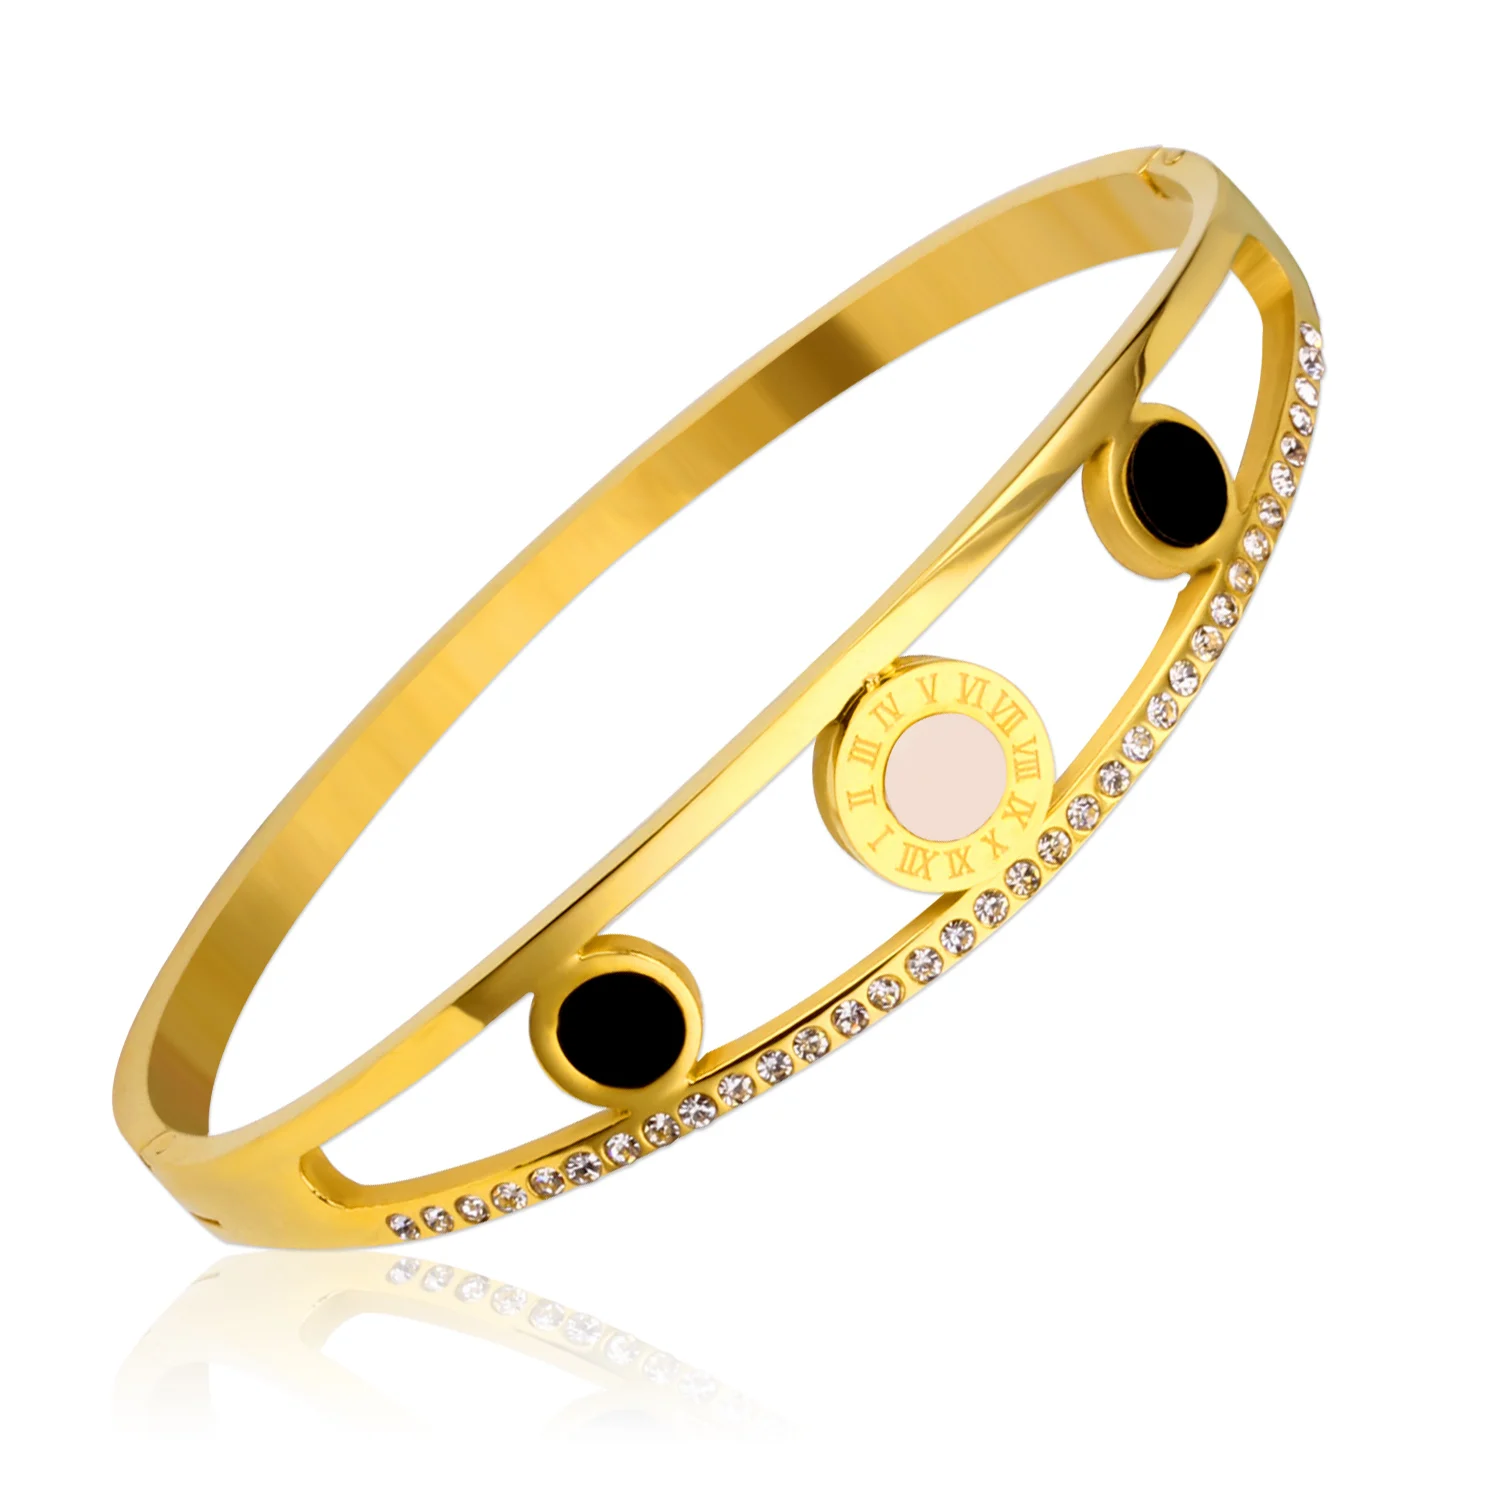 

Luxury wedding gift women brilliant cuff bangle roman numeral charms bracelets OEM/ODM jewellery, Gold plated